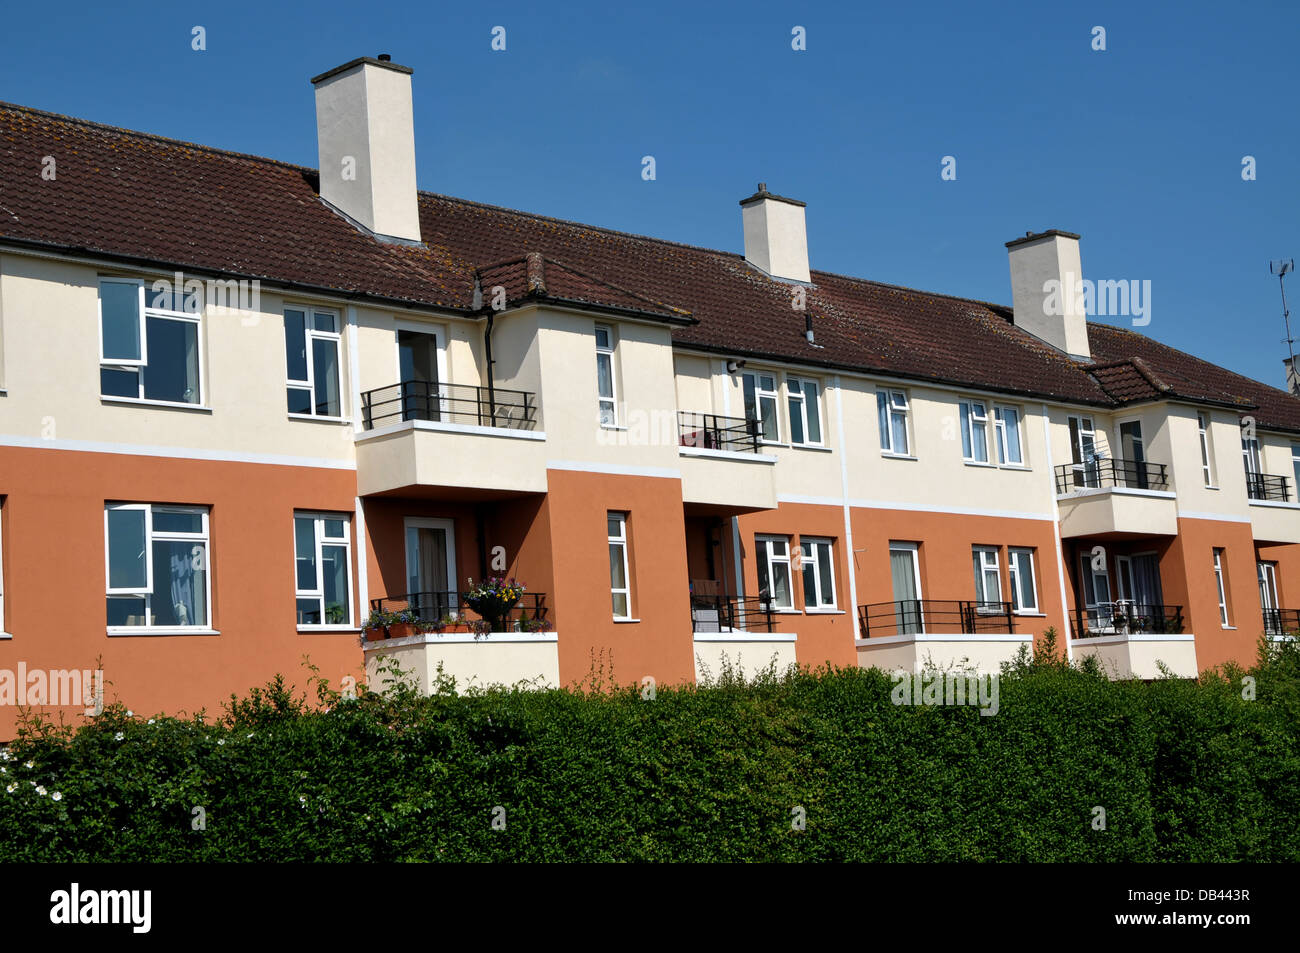 Row of terraced houses/flats against a clear blue sky. Stock Photo